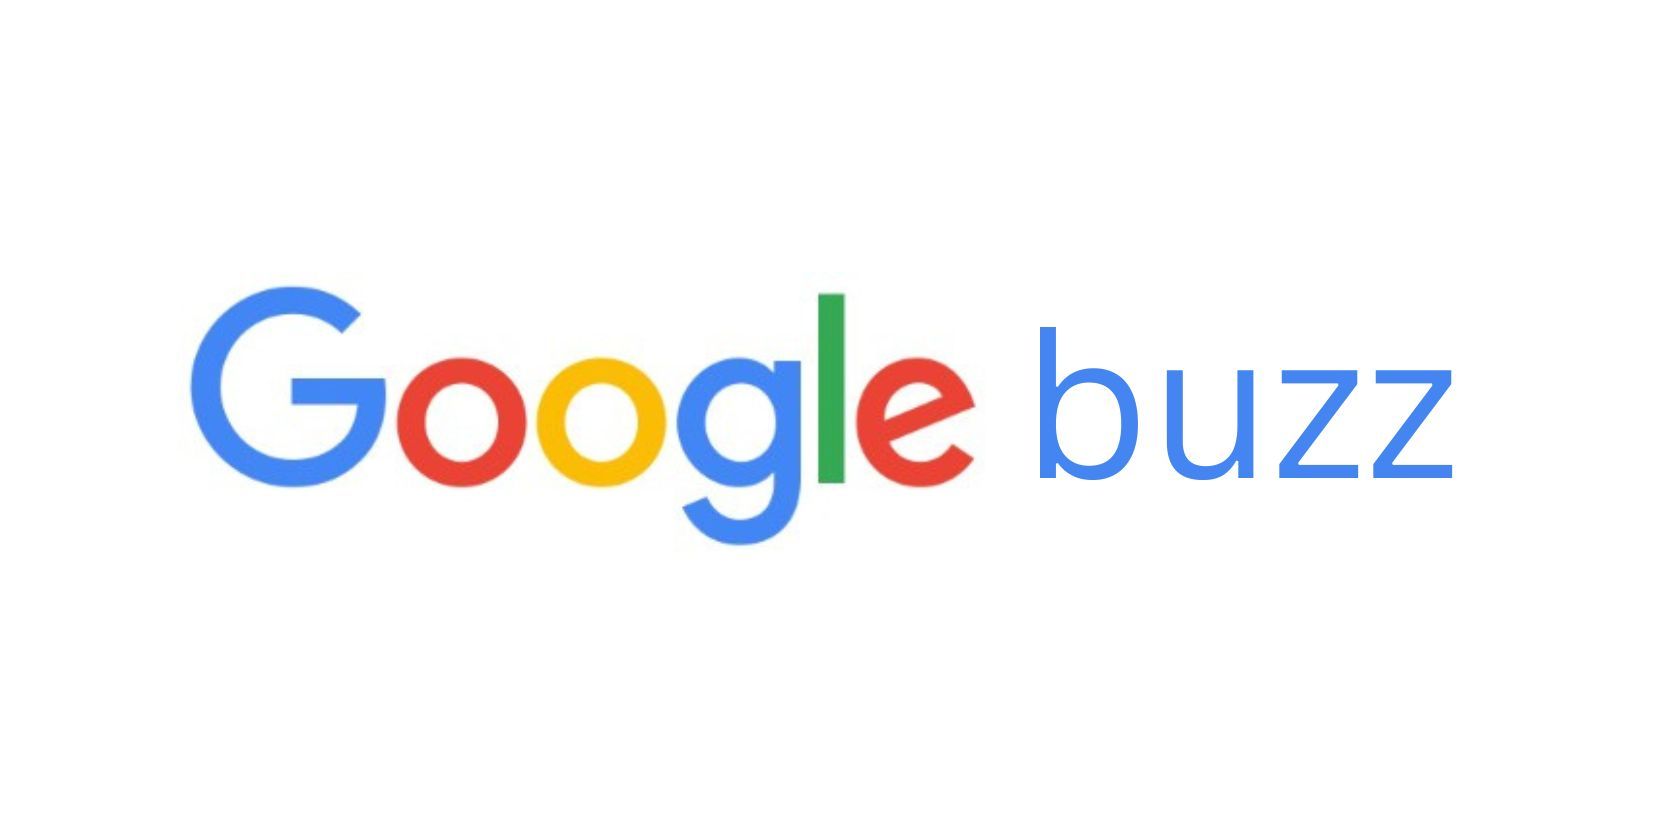 Google buzz